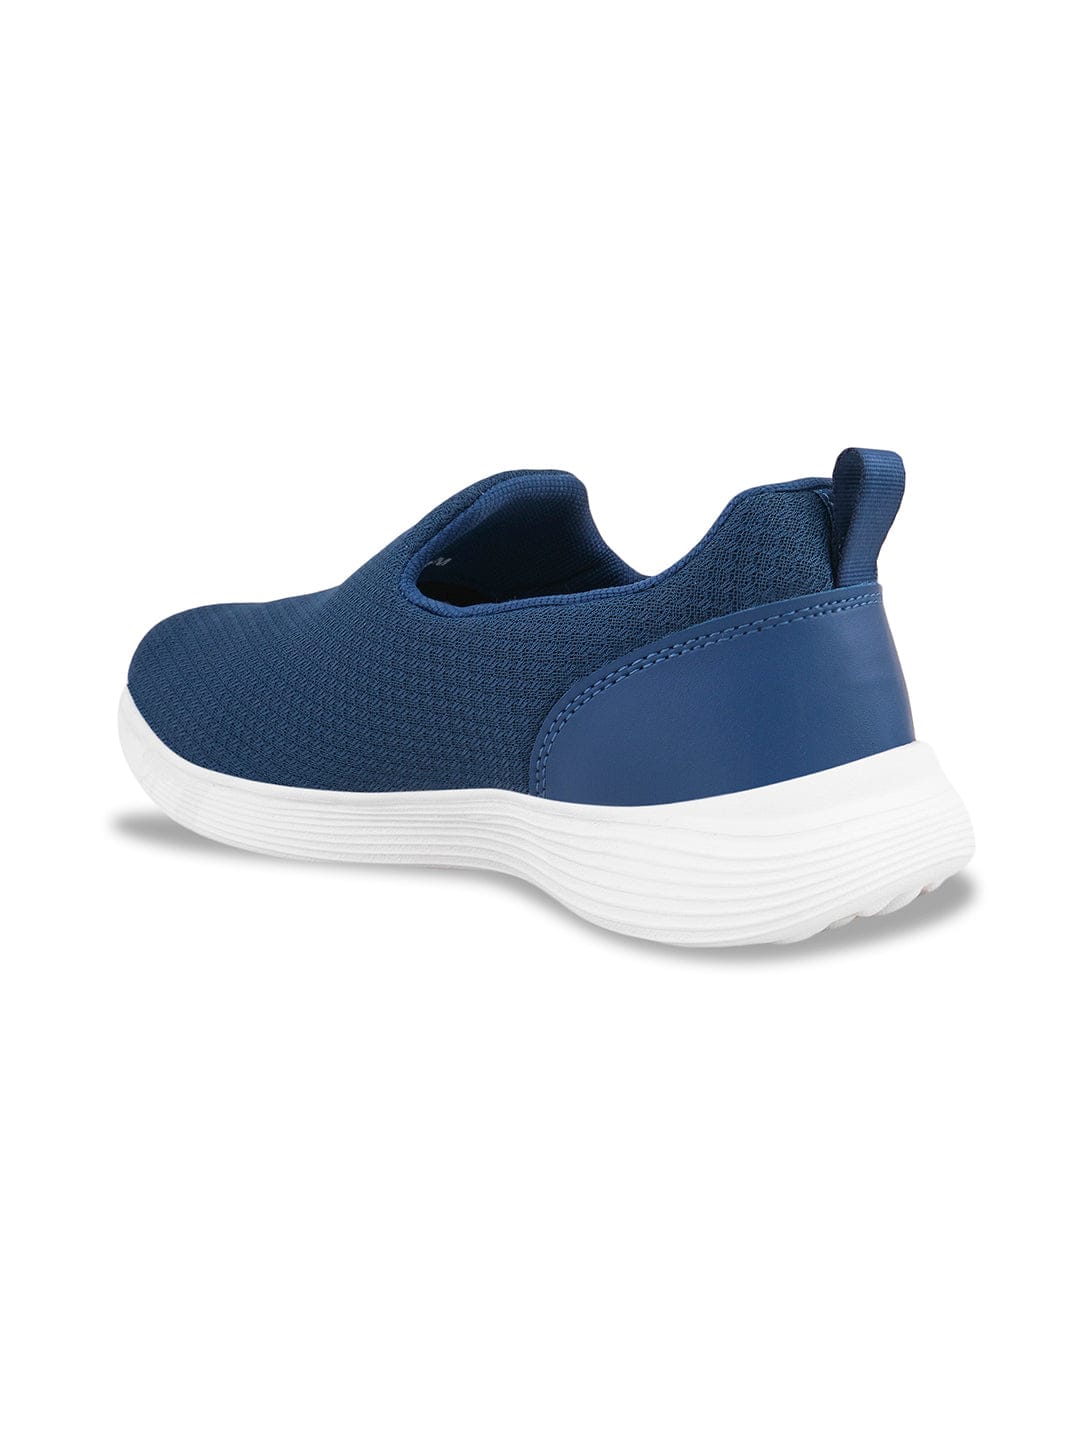 Buy Walking Shoes For Men: Shuttle-Mod-Blu | Campus Shoes